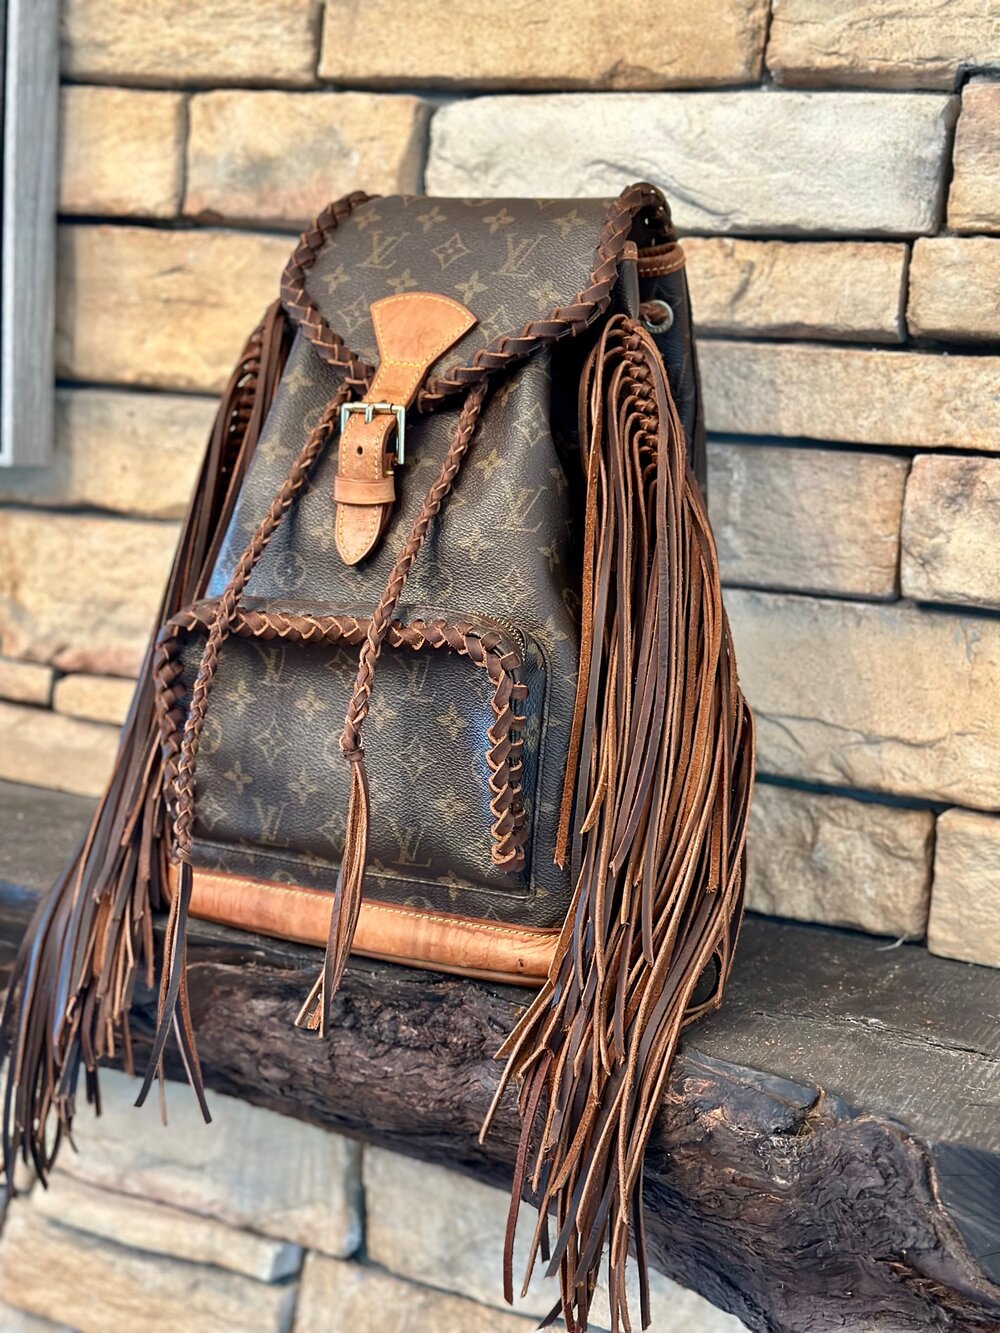 The Backpack Large Brown Short Fringe — Classic Boho Bags